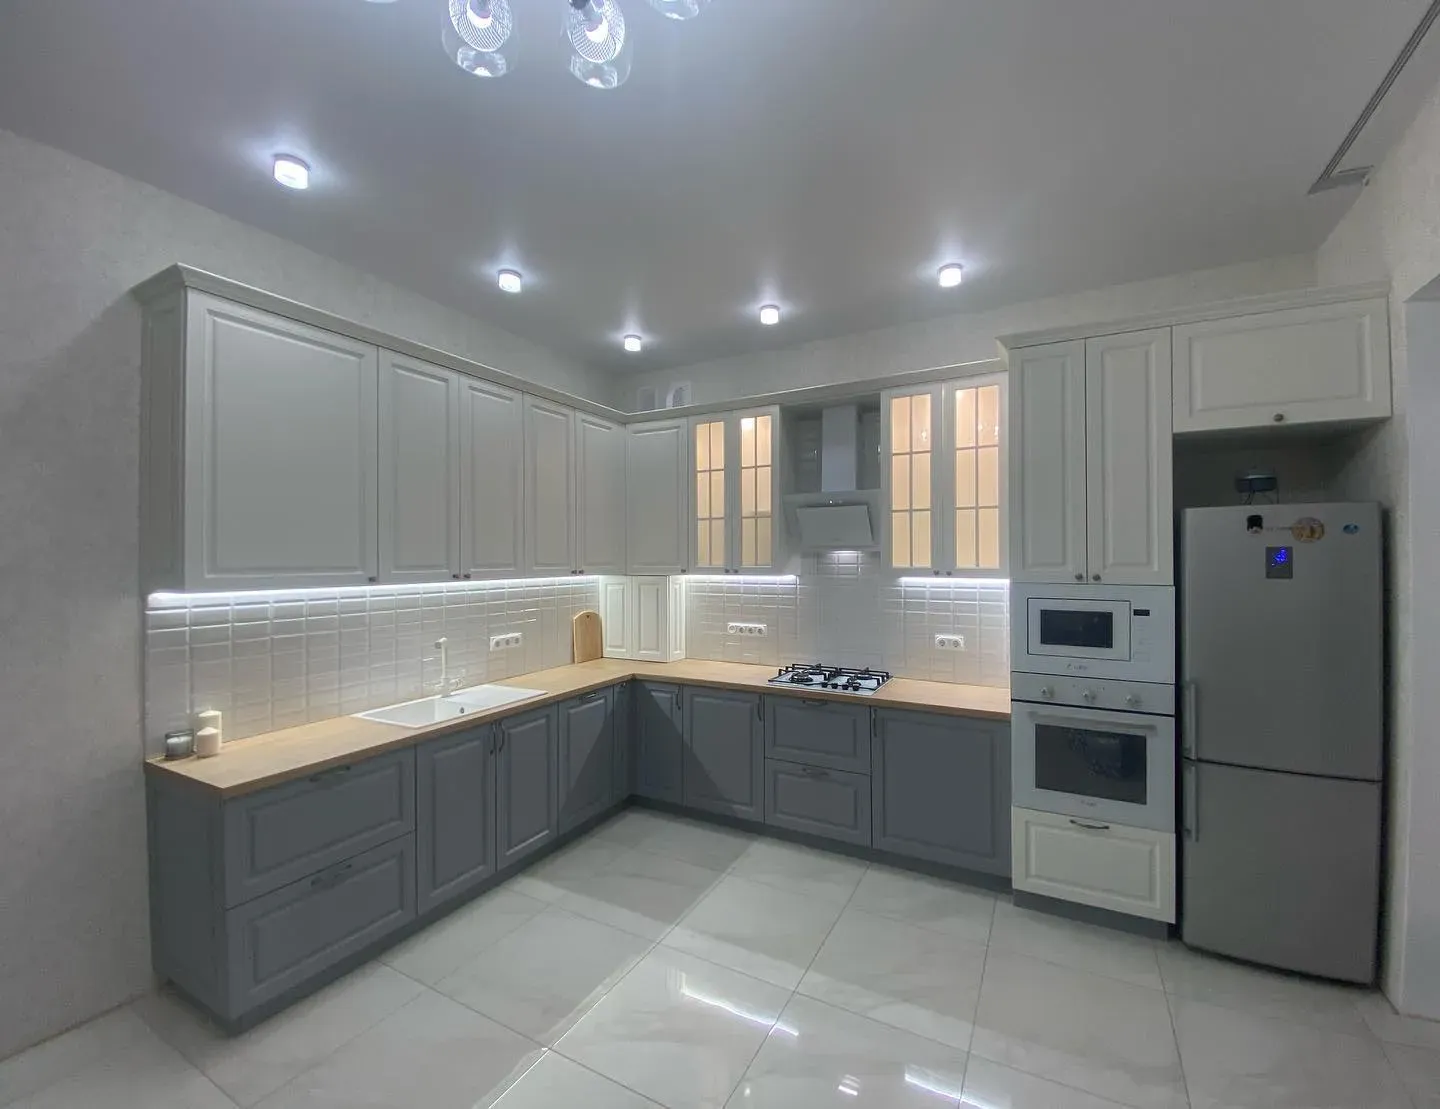 RAL Window grey kitchen cabinets 